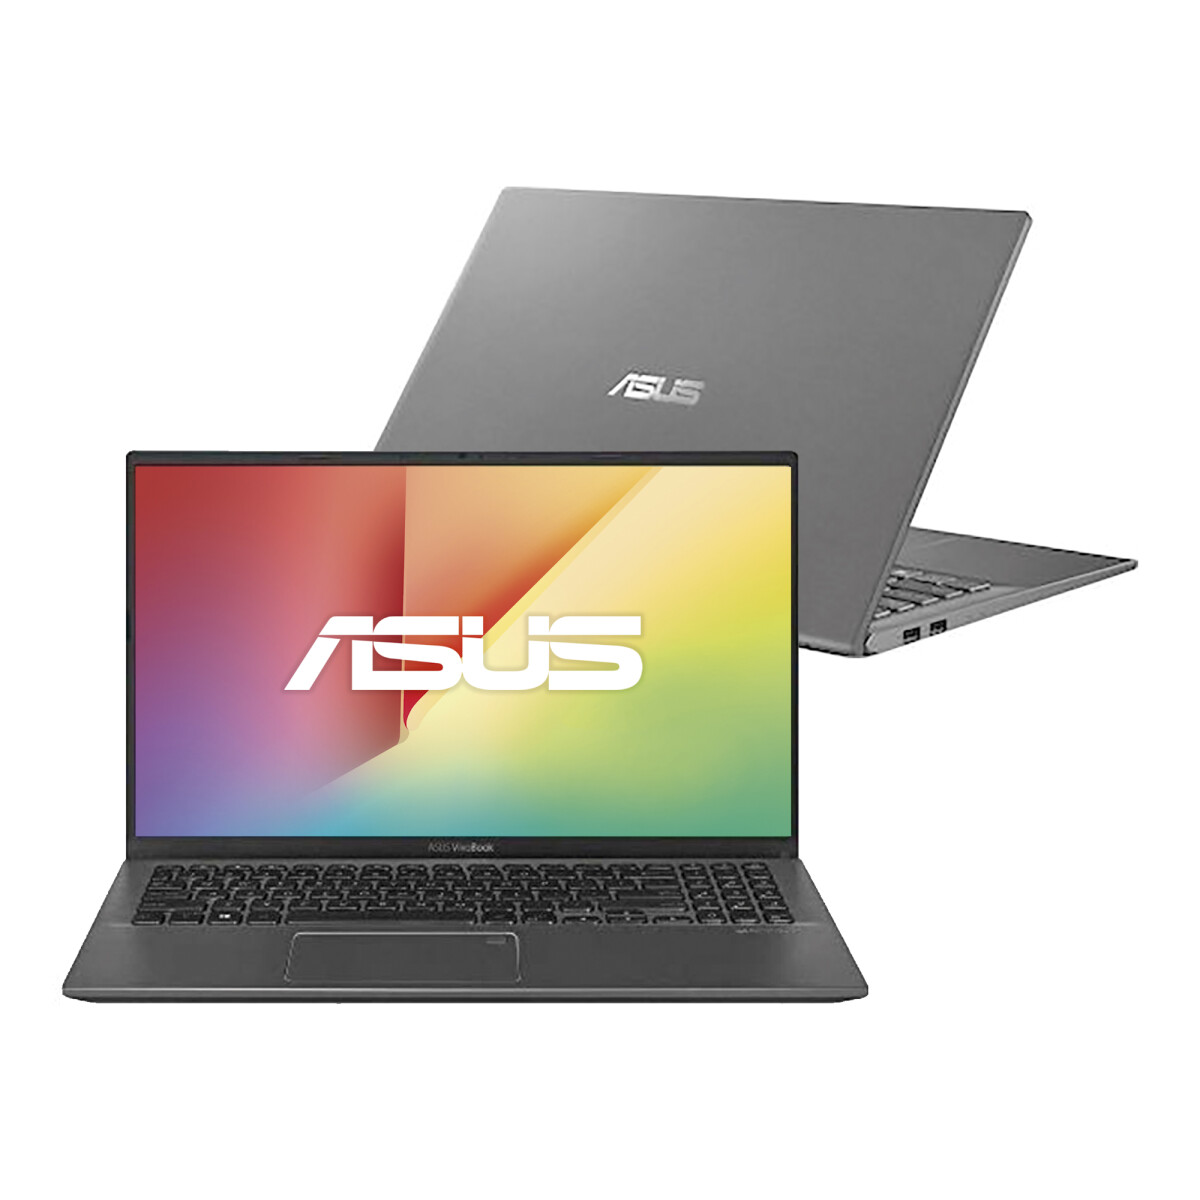 Asus Laptop Notebook Vivobook Intel I5 Ssd 256GB 8GB W10 - 001 